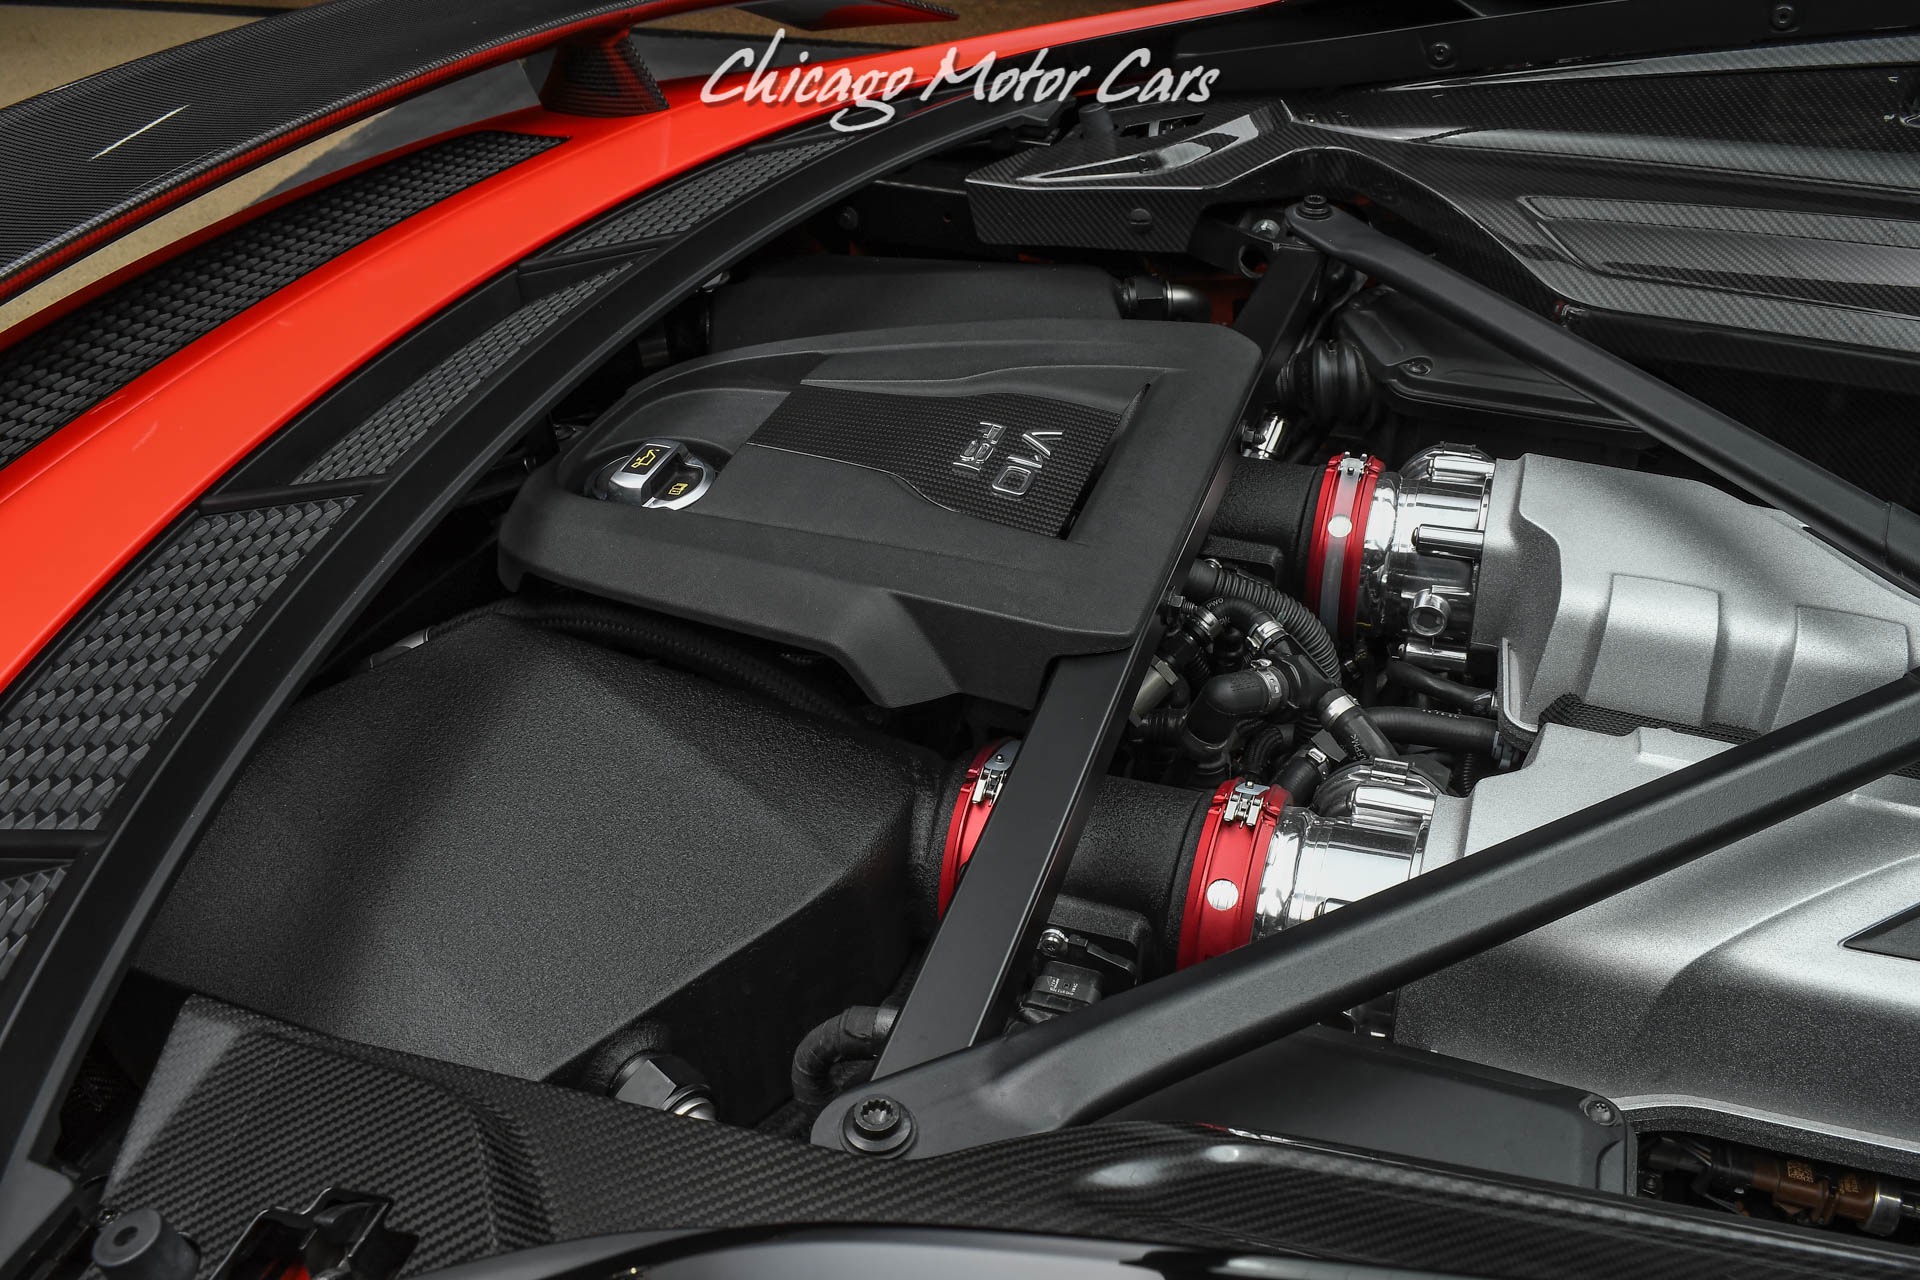 Used-2017-Audi-R8-52-quattro-V10-Plus-Underground-Racing-Build-Over-250k-Invested-1400WHP